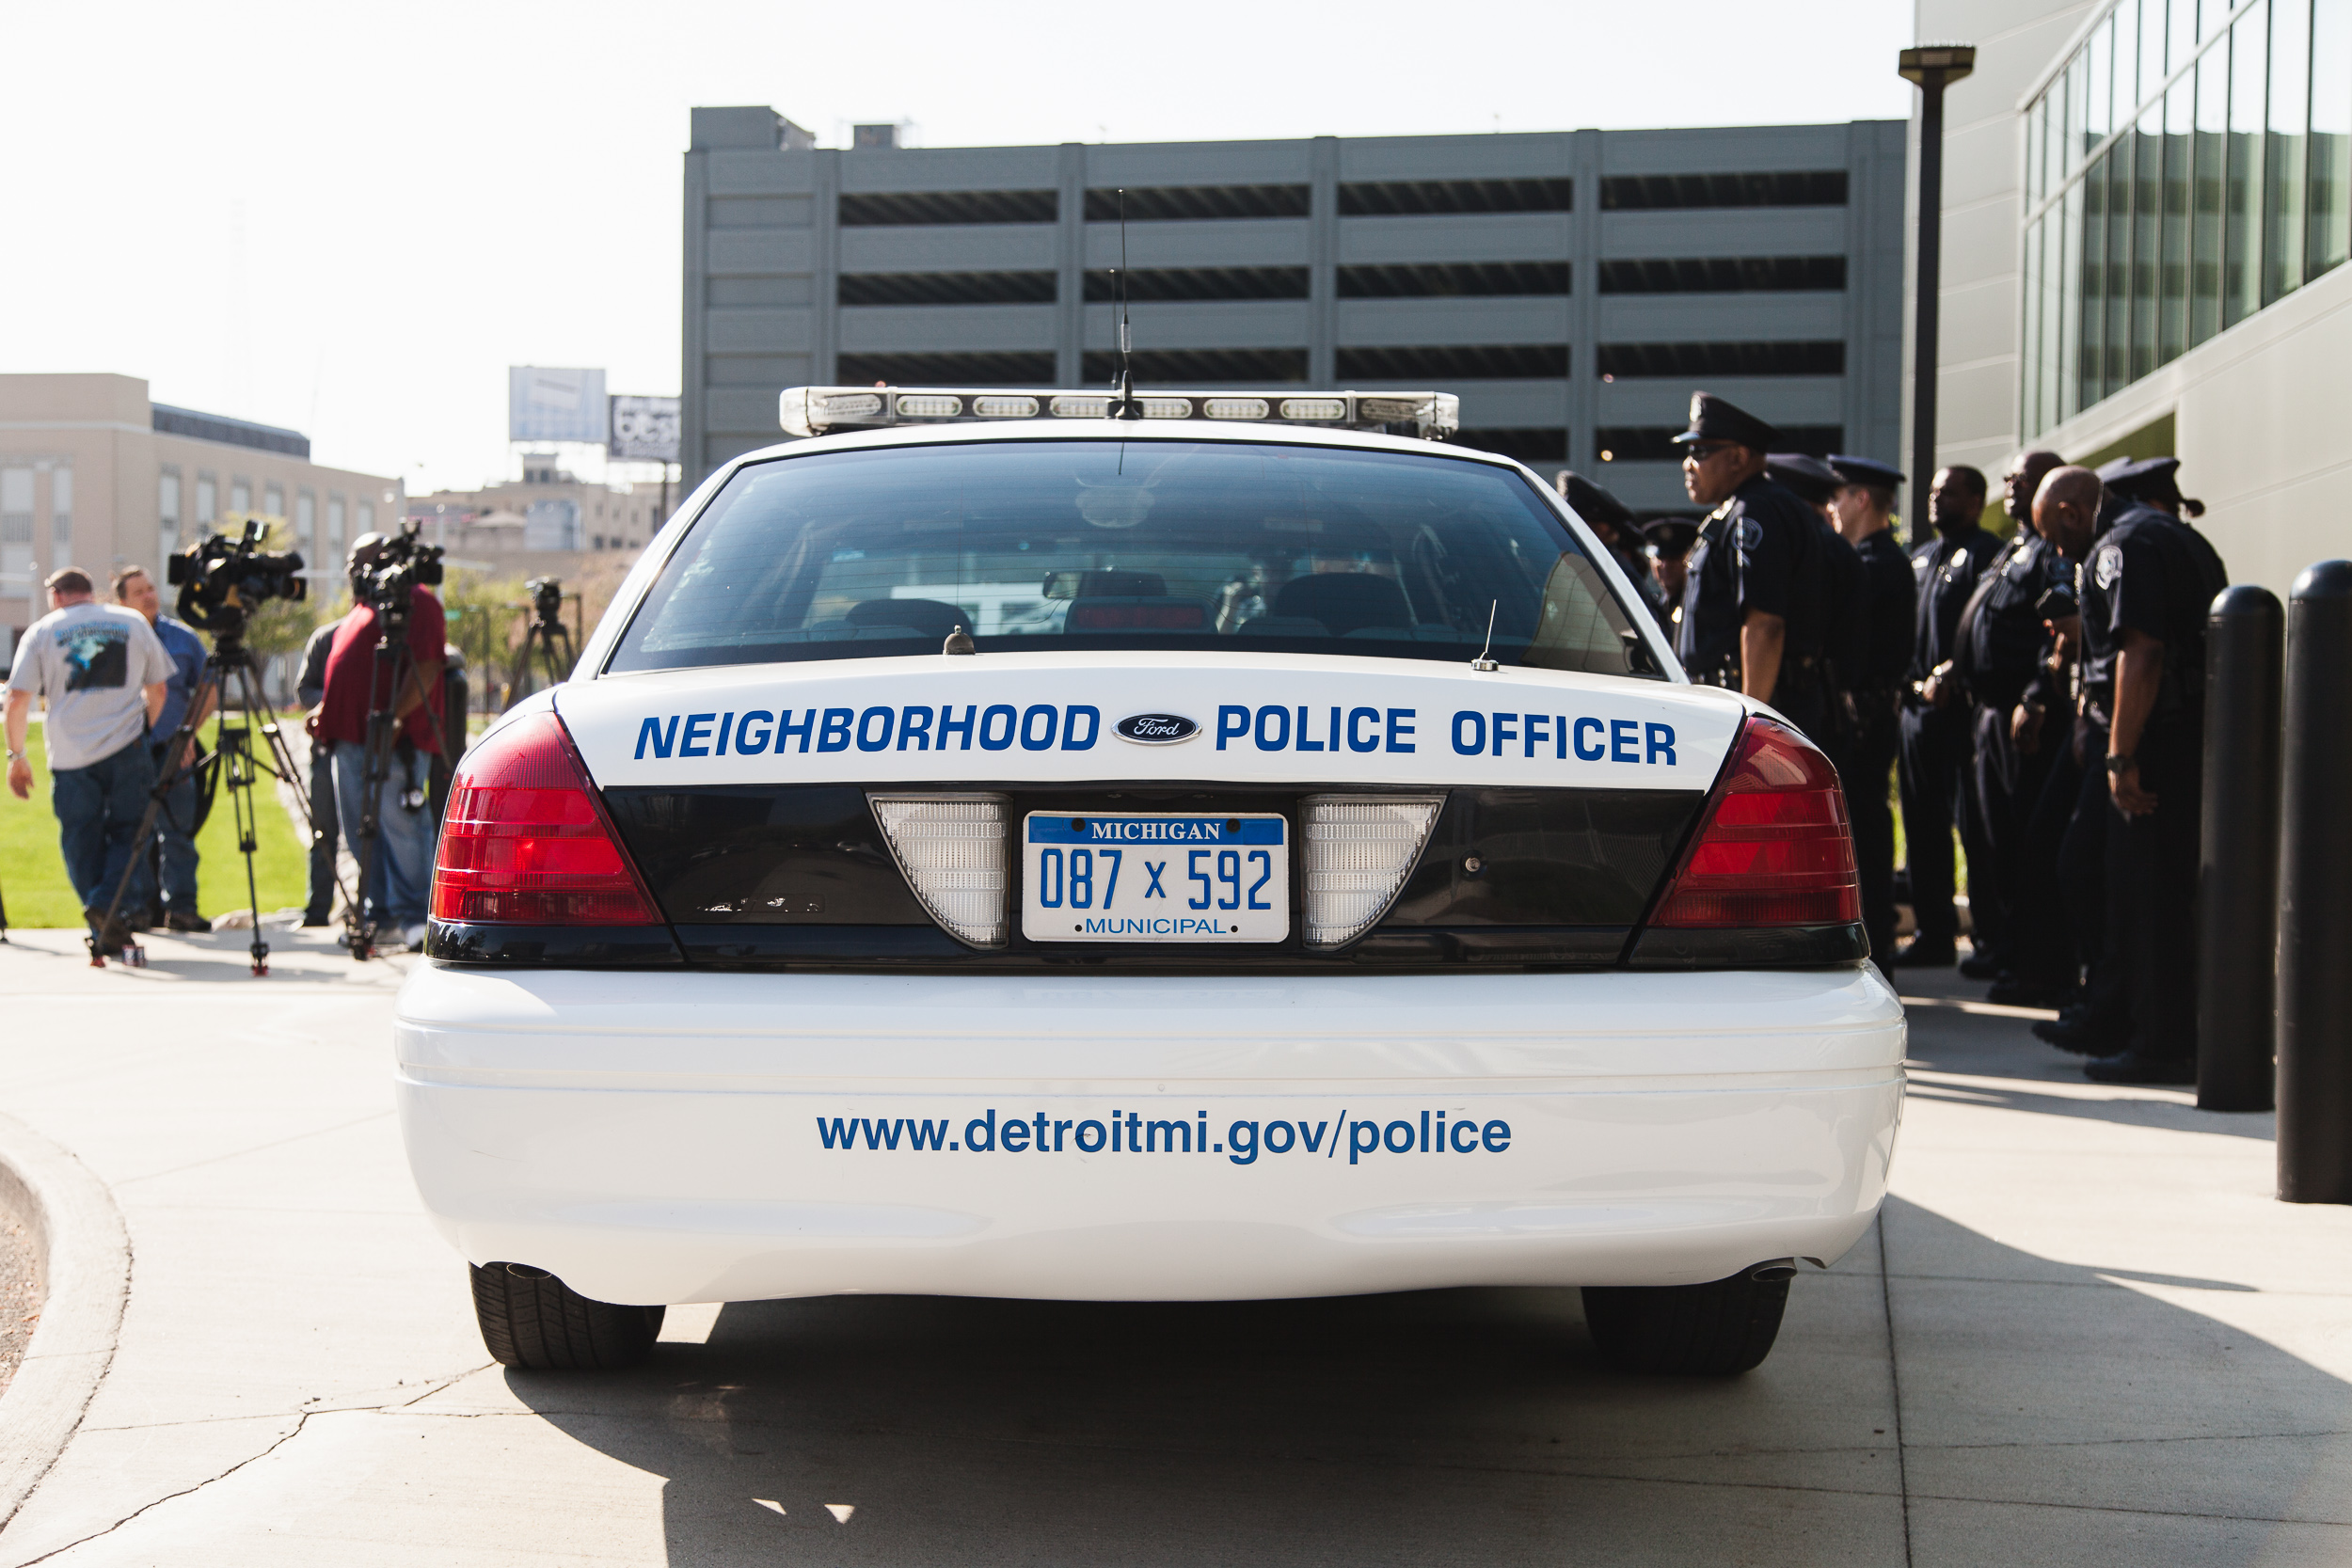 Detroit Police Department Increasing Neighborhood Presence by Providing